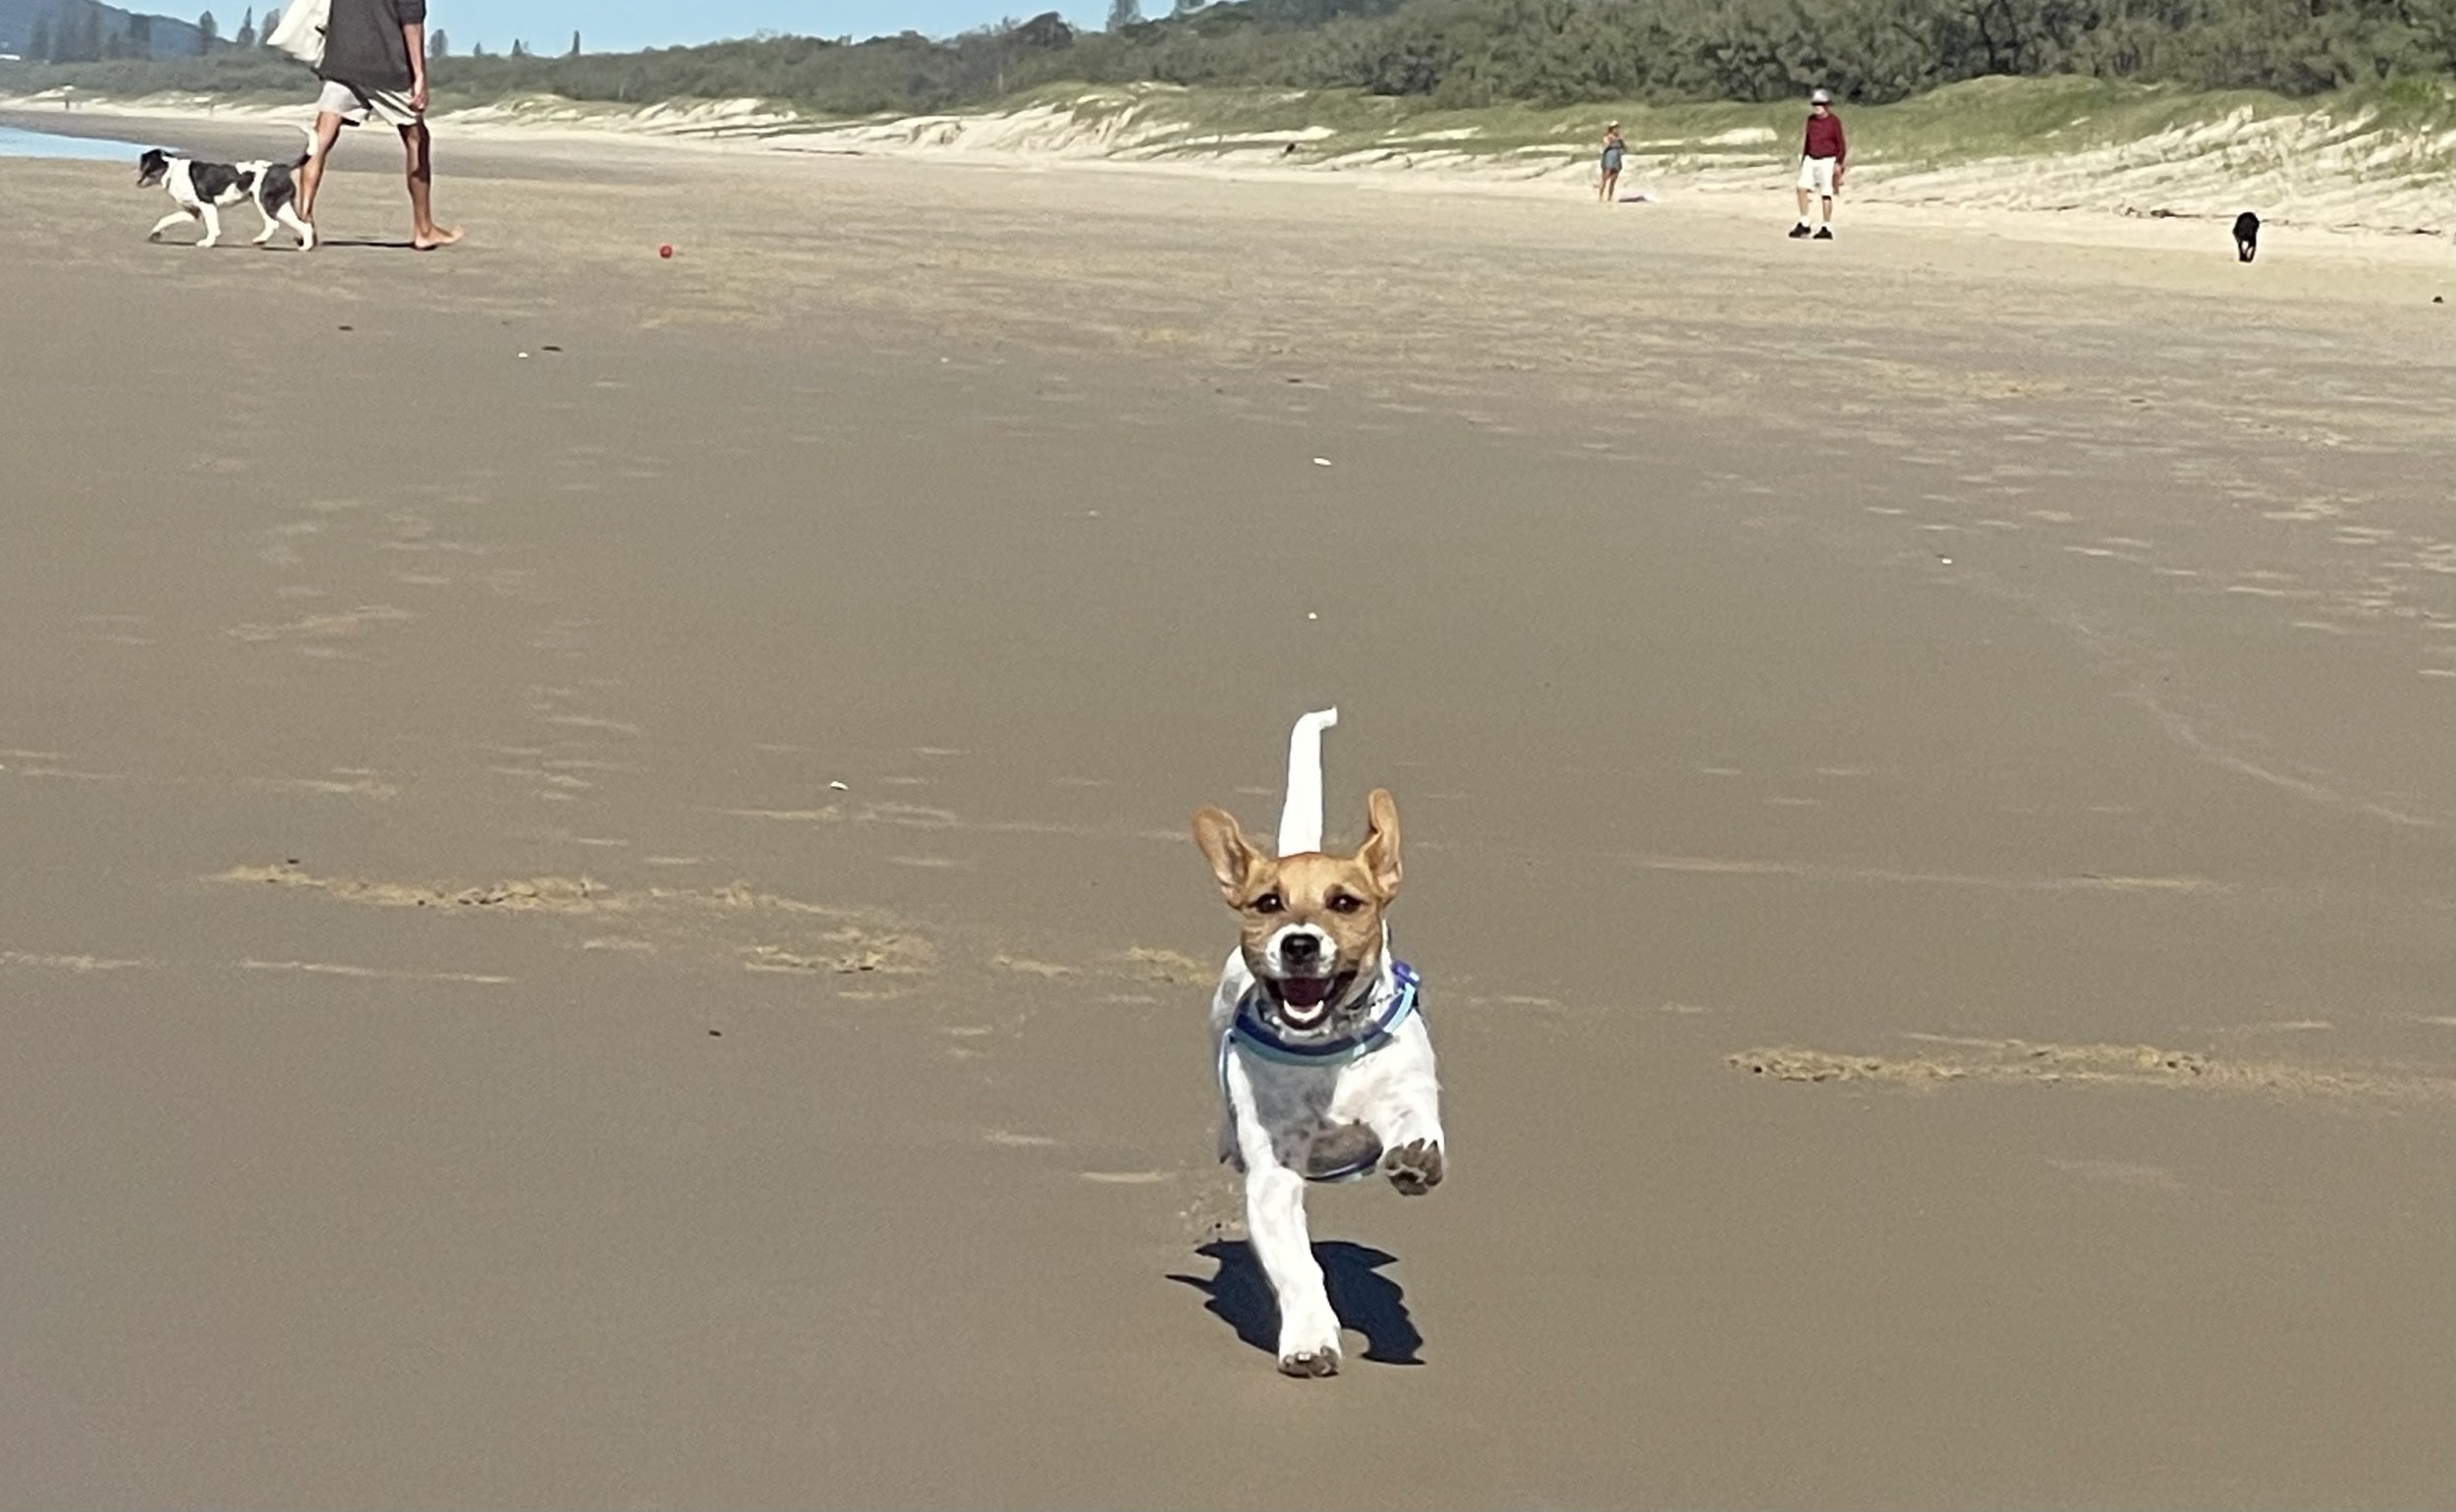 Doggy enjoying the freedom off leash at Marcus Beach